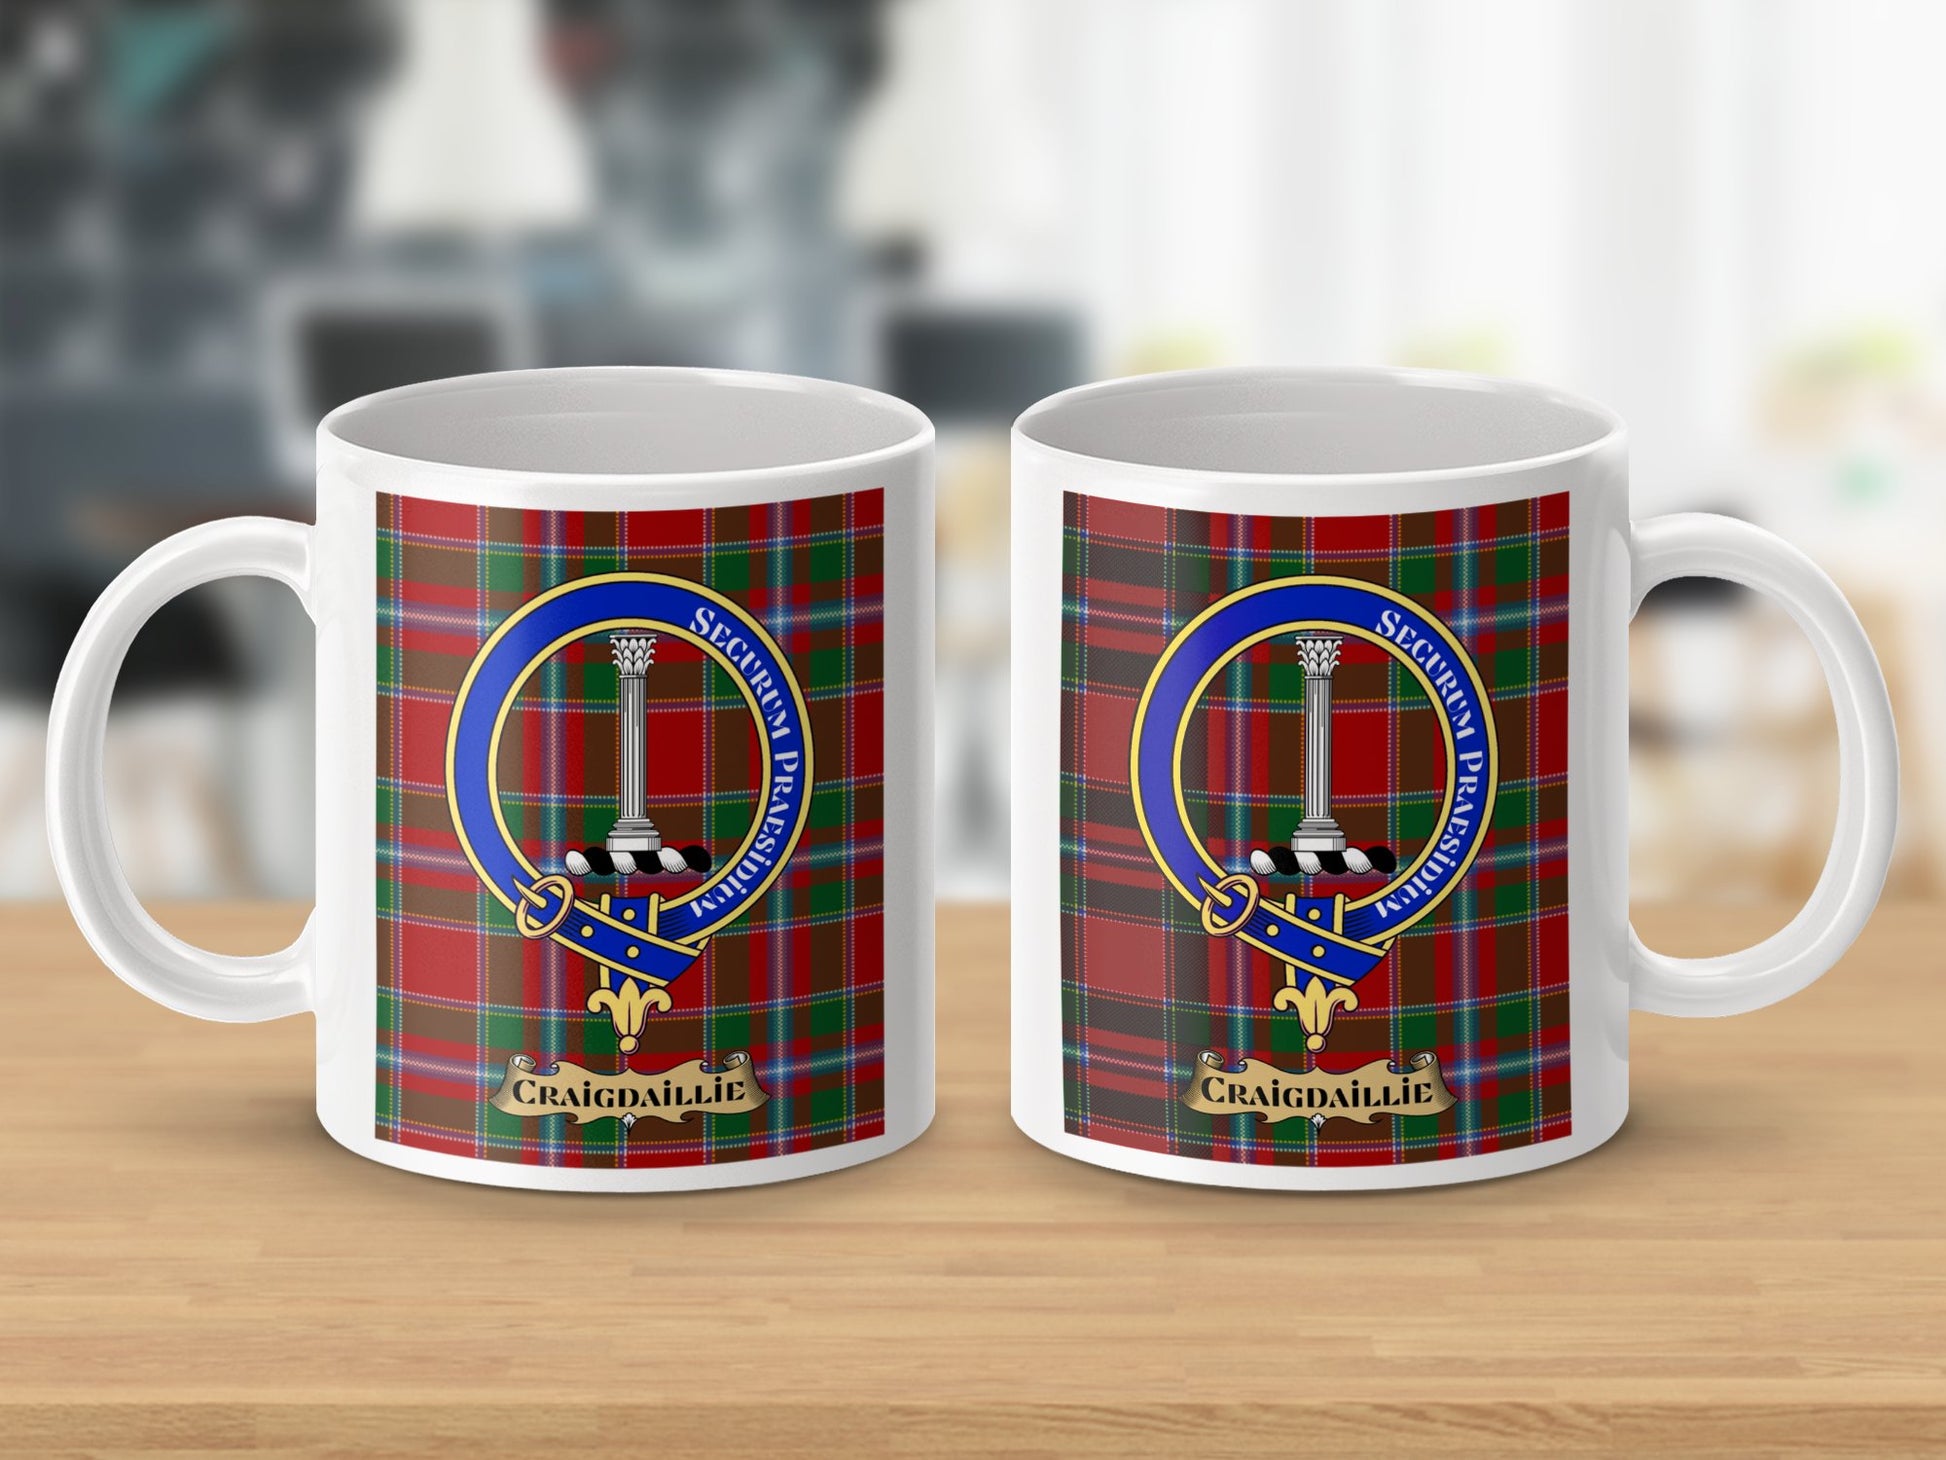 Craigdaillie Scottish Plaid Design Mug - Living Stone Gifts